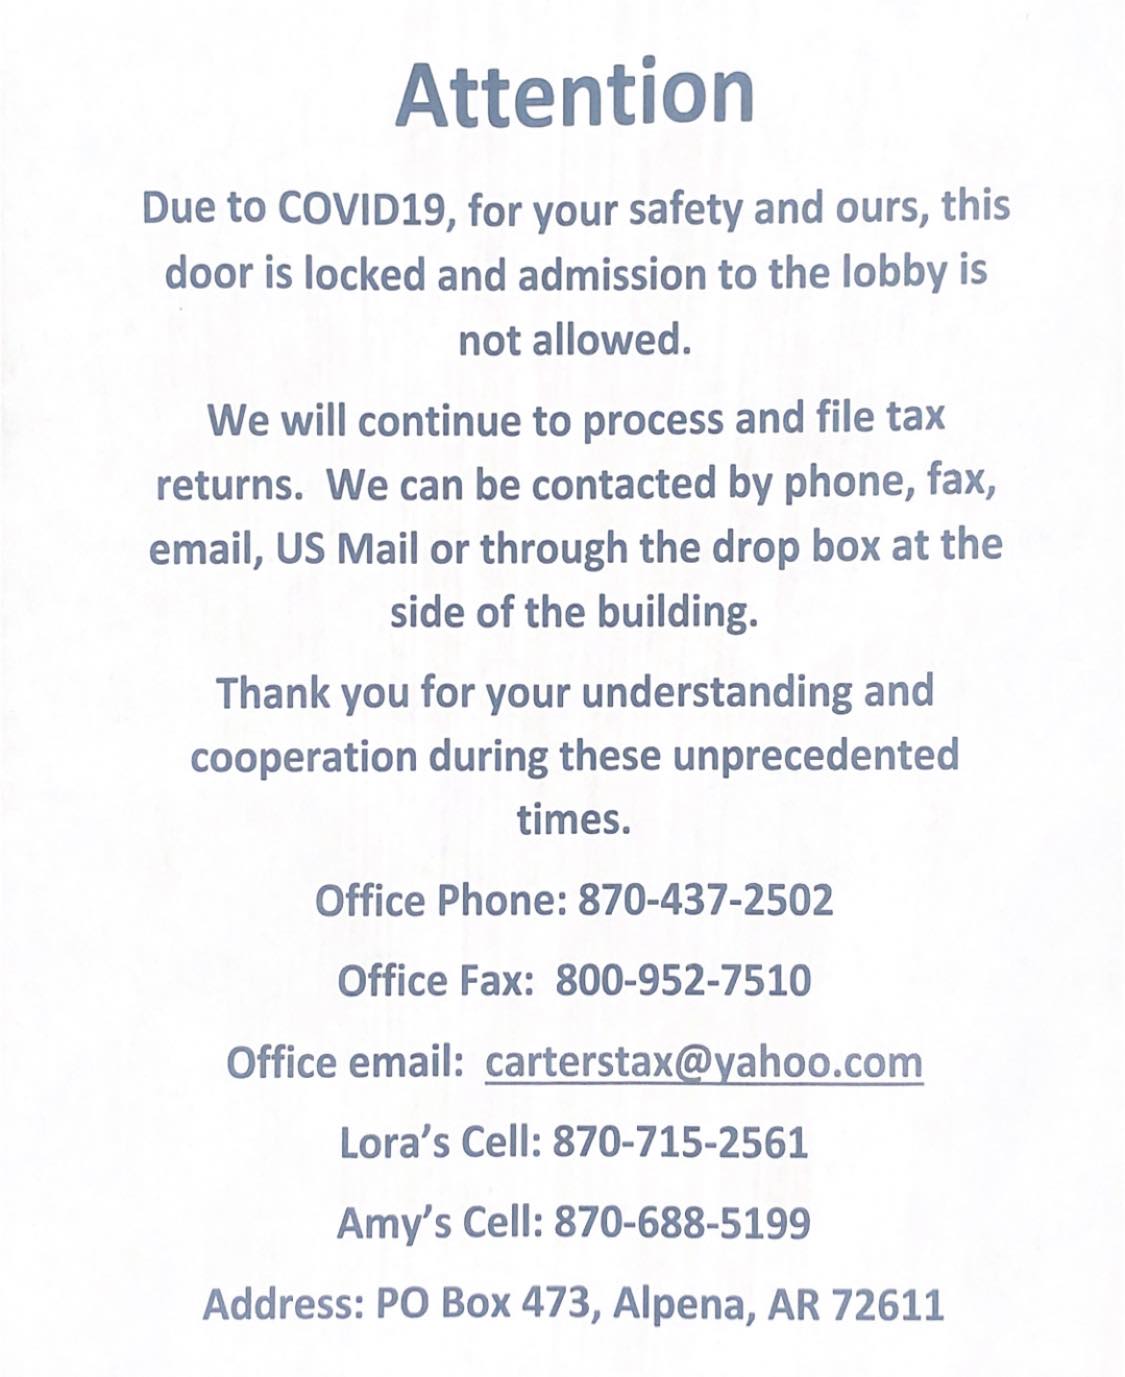 Carters Tax Services 108 US-412, Alpena Arkansas 72611